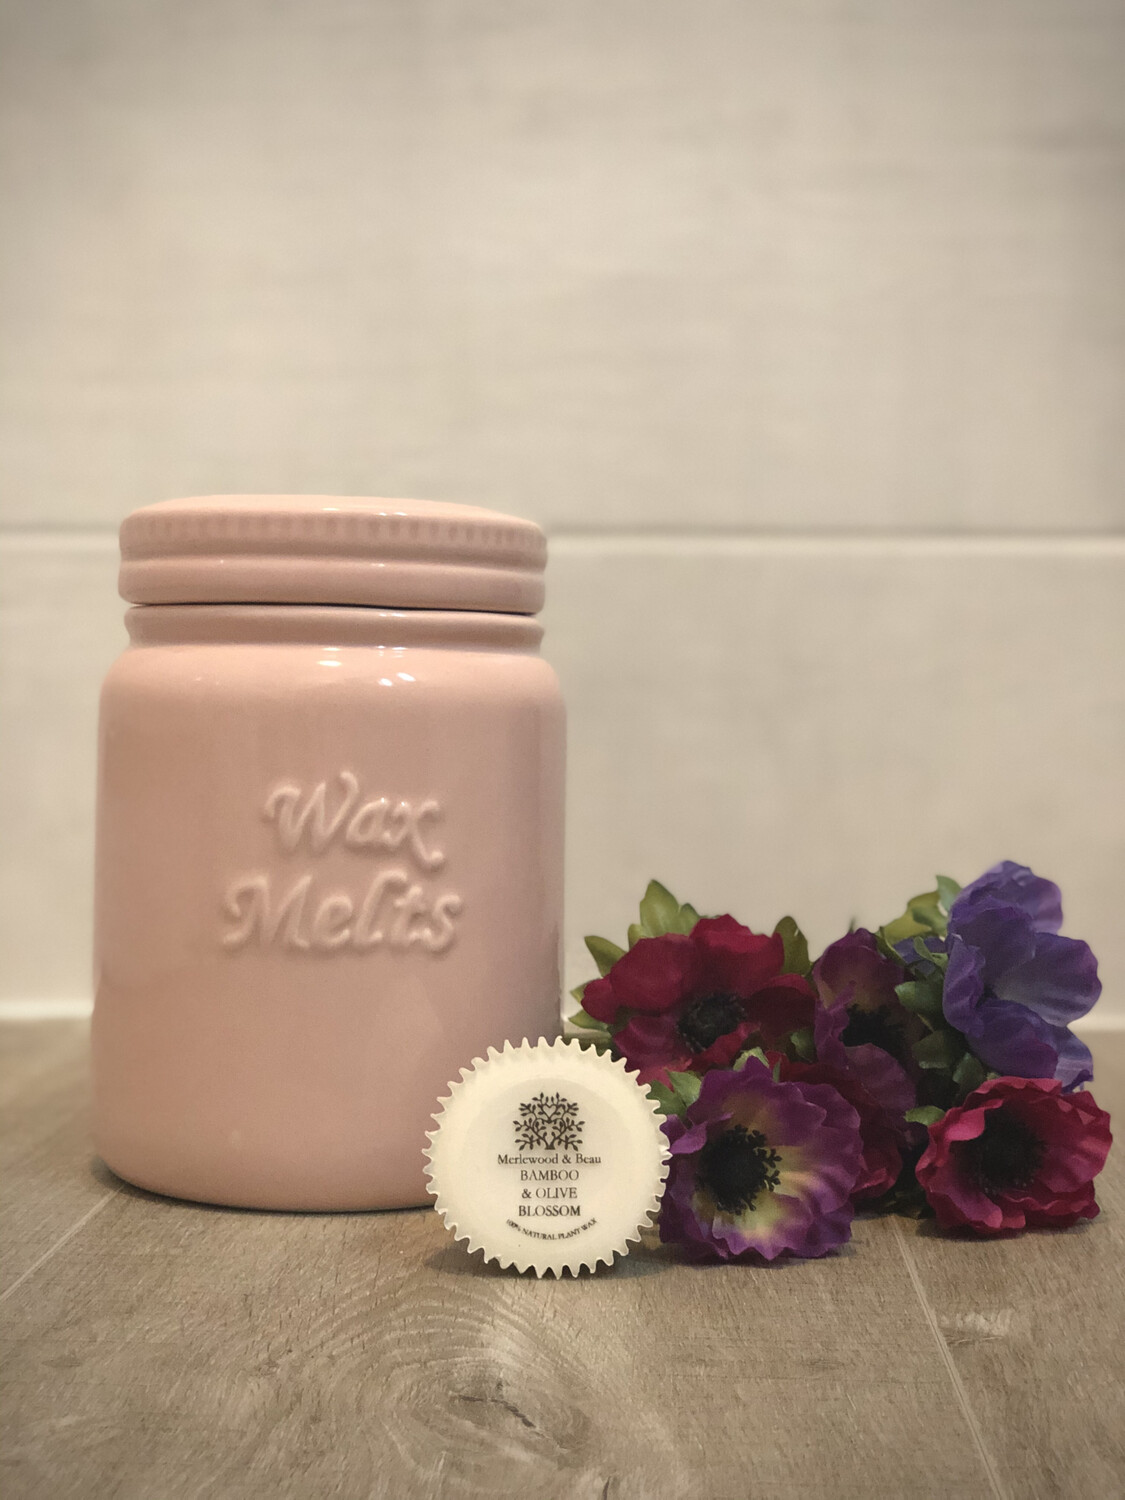 Ceramic Wax Melt Storage Jars